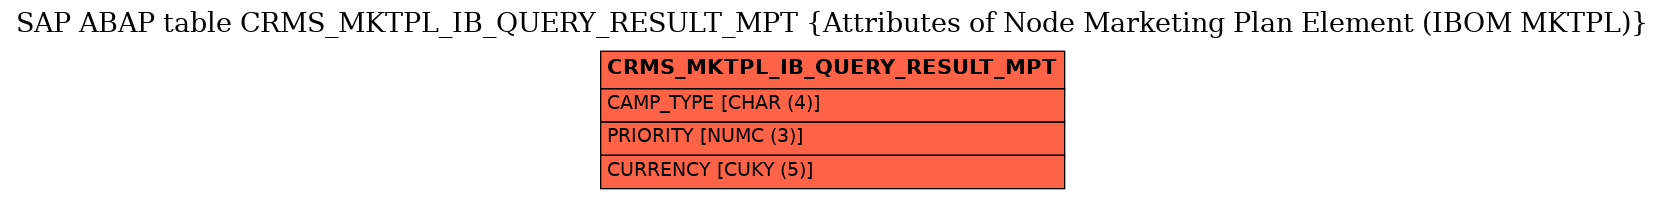 E-R Diagram for table CRMS_MKTPL_IB_QUERY_RESULT_MPT (Attributes of Node Marketing Plan Element (IBOM MKTPL))